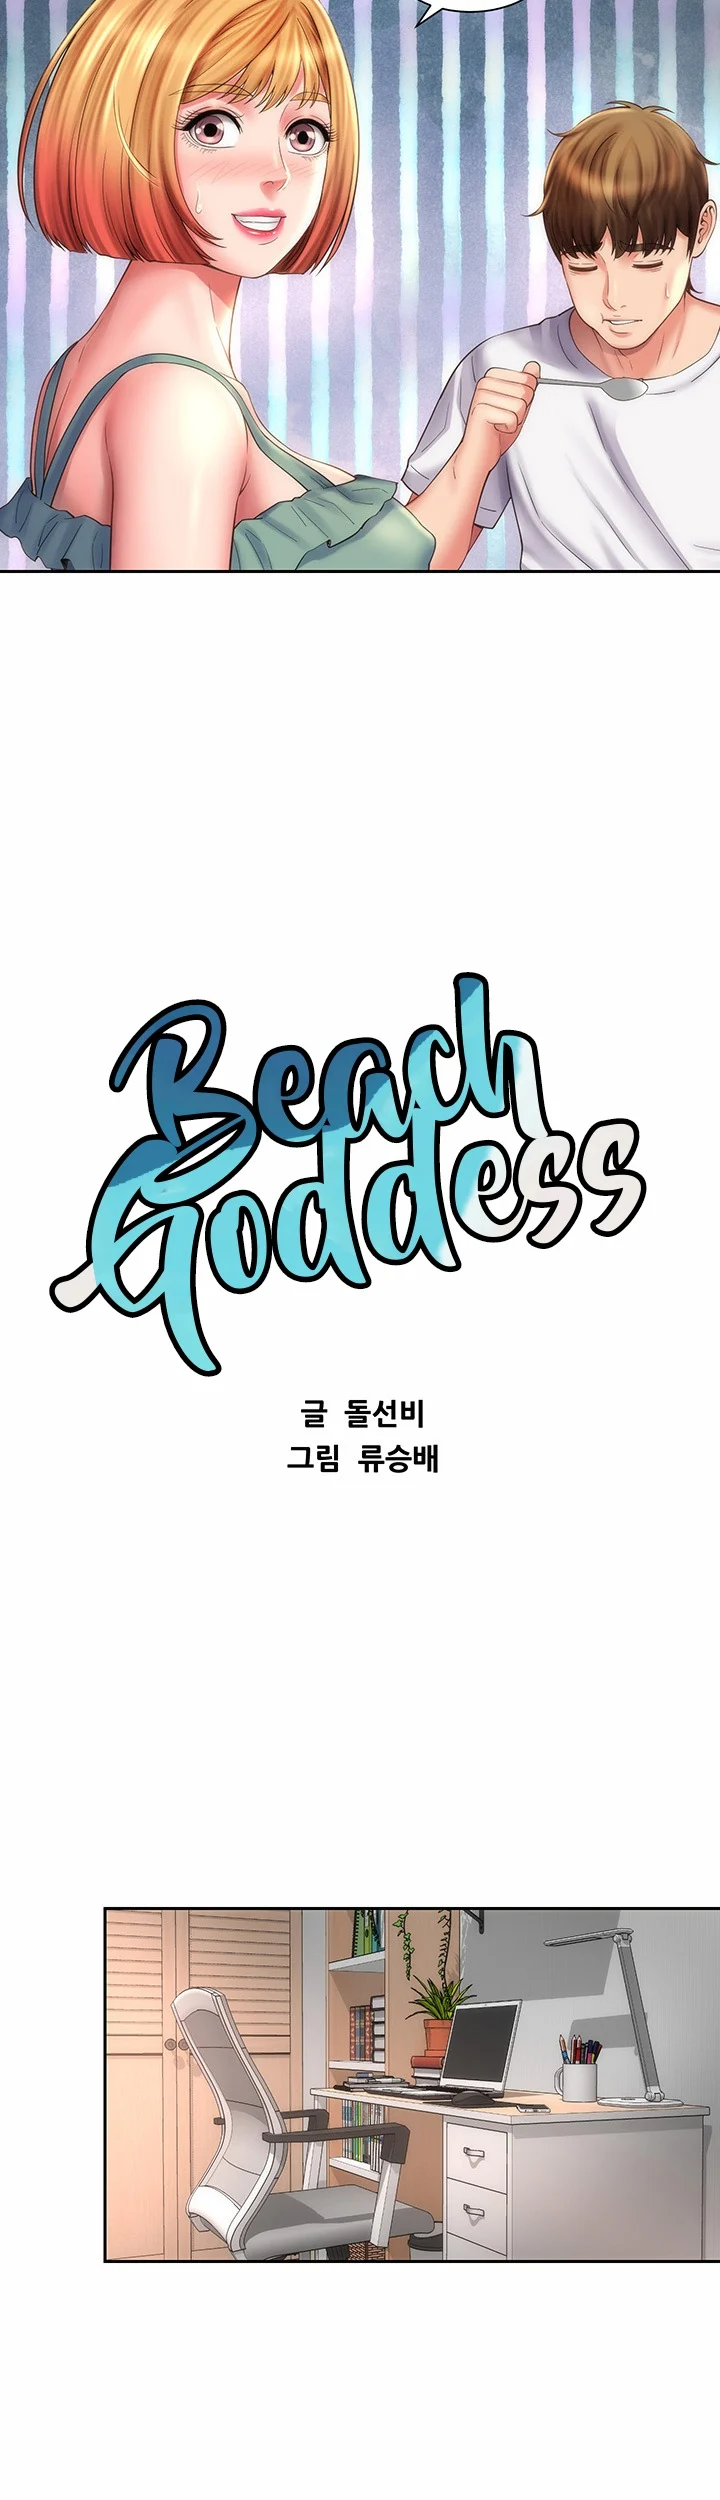 Beach Goddess image